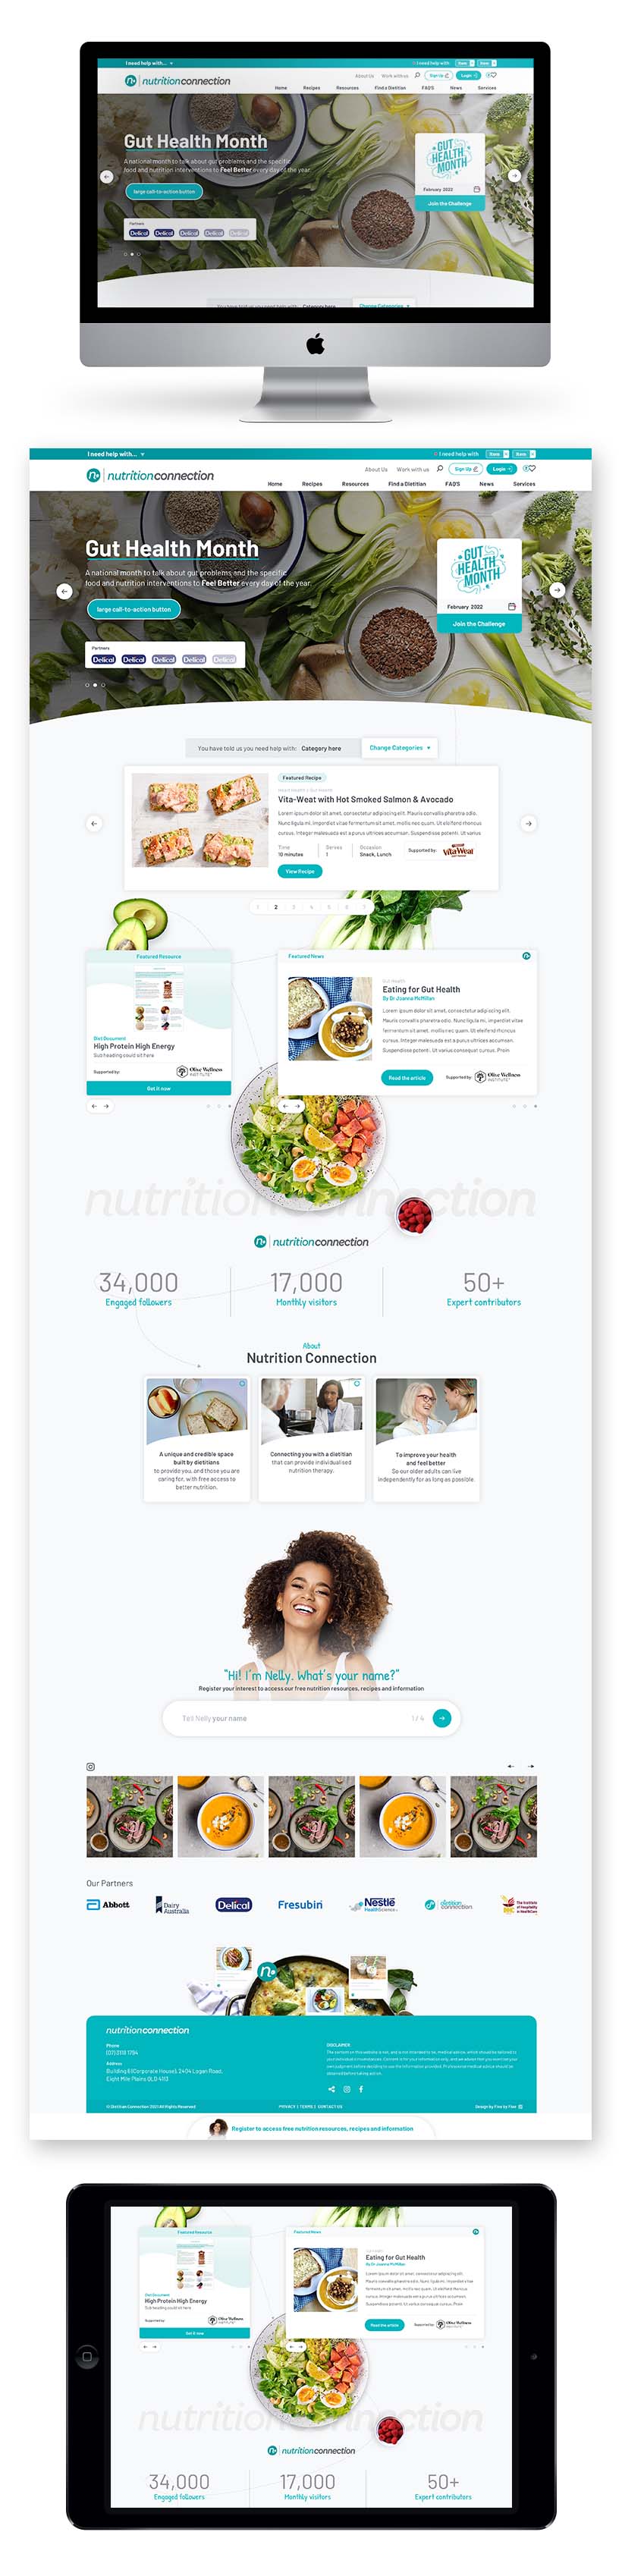 Nutrition Connection Site